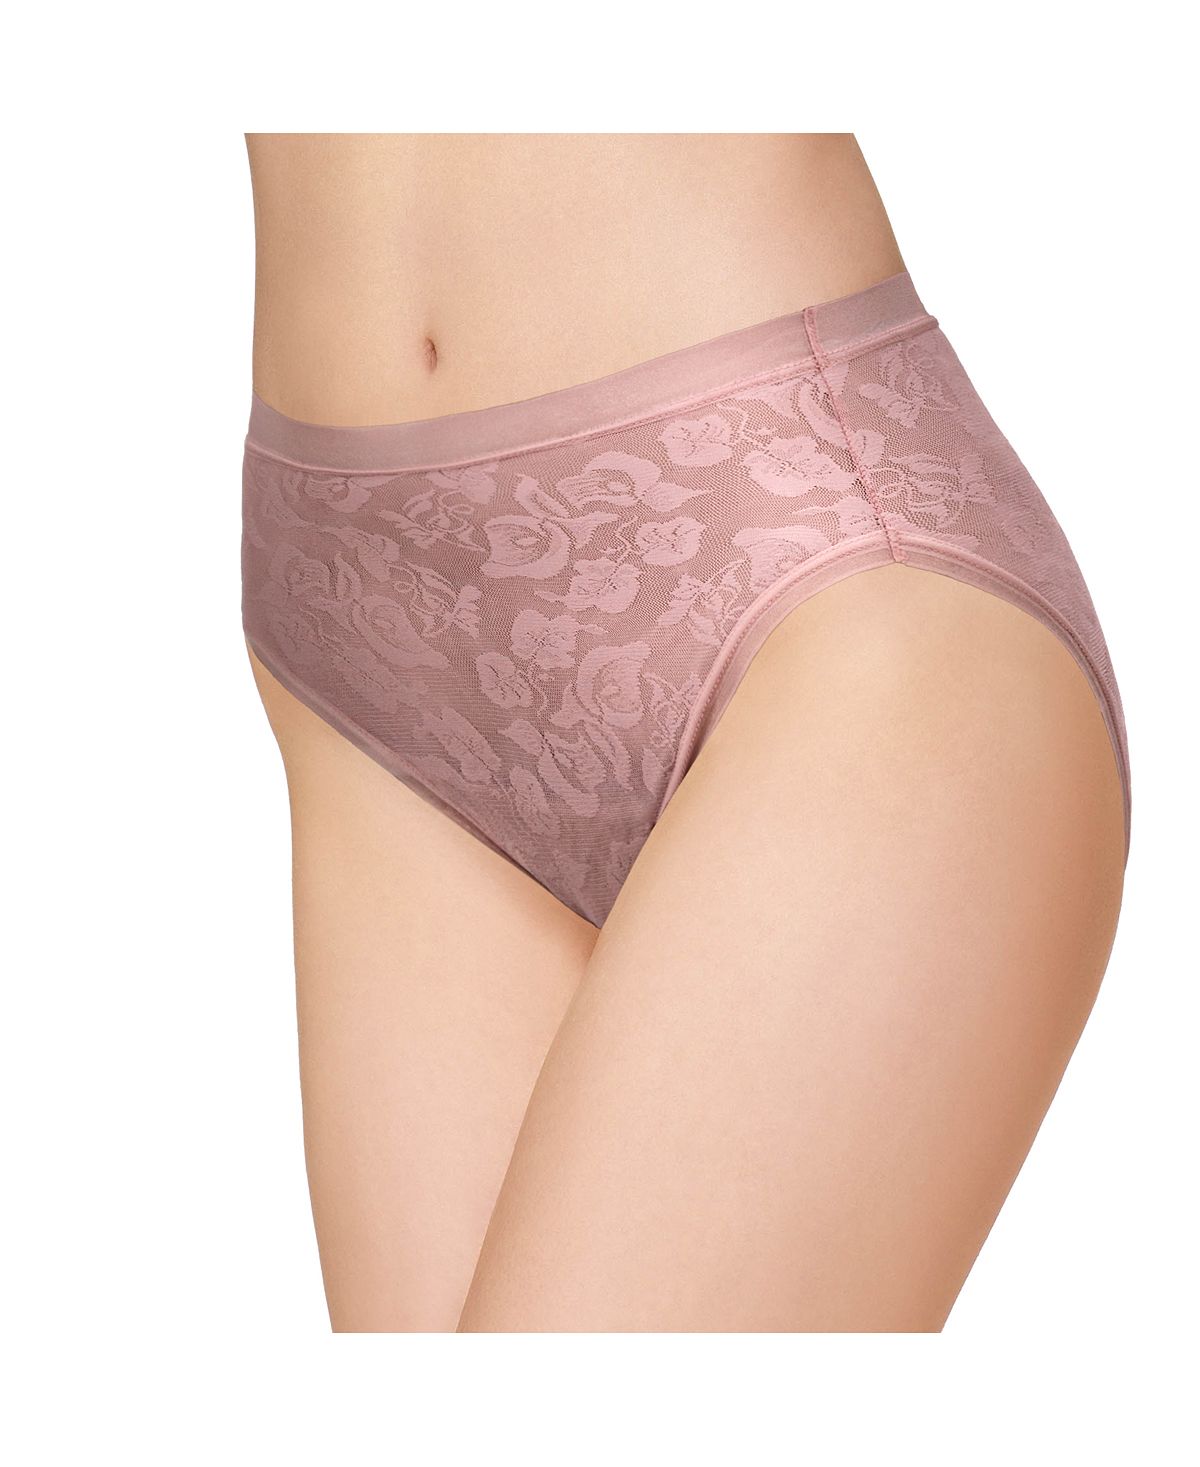 Wacoal Awareness Lace High-cut Brief Underwear 871101 Ash Rose